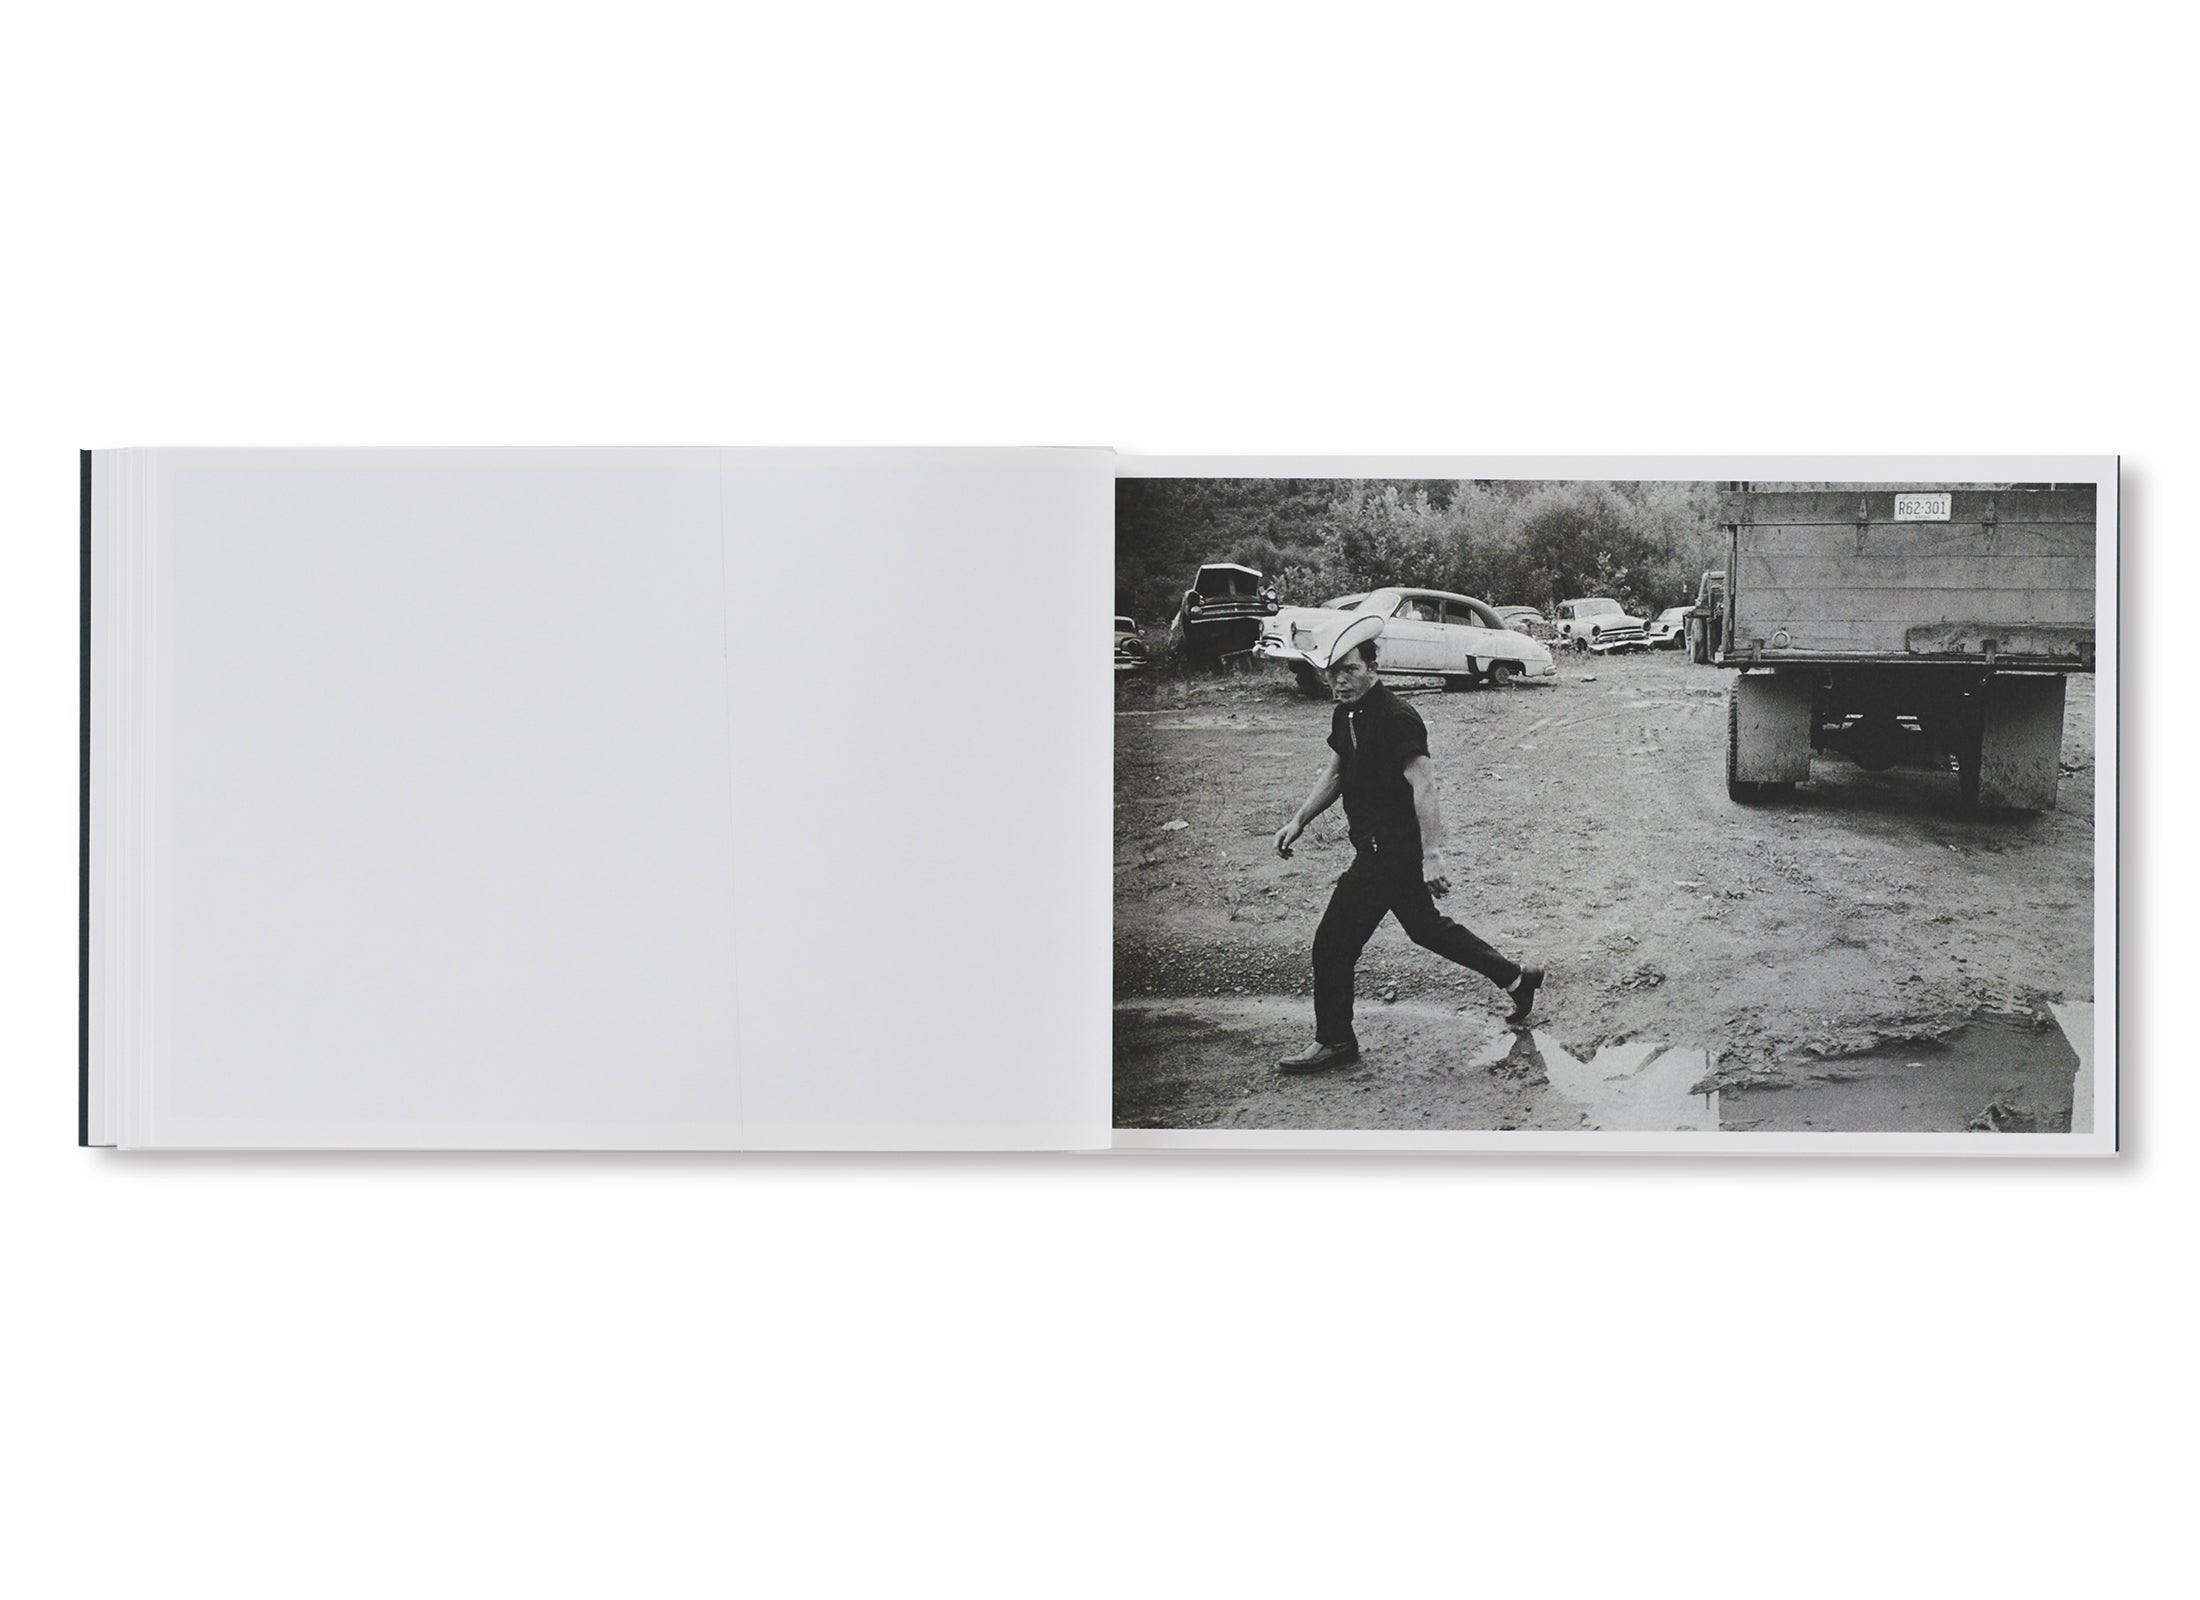 PICTURES FROM MOVING CARS by Joel Meyerowitz, Daido Moriyama, John Divola